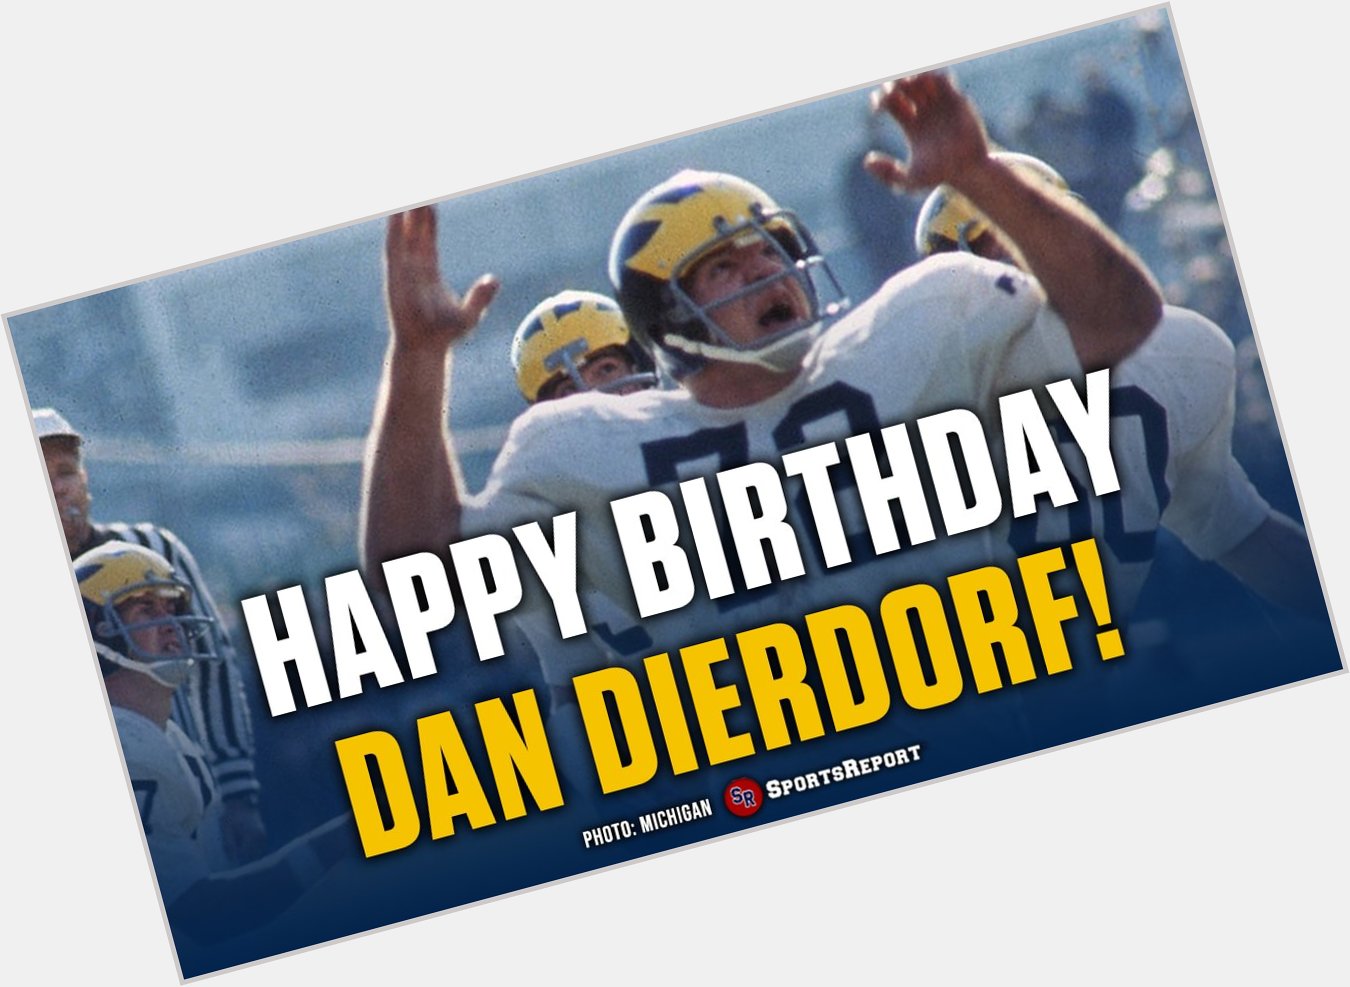  Fans, let\s wish legend Dan Dierdorf a Happy Birthday! GO BLUE!! 